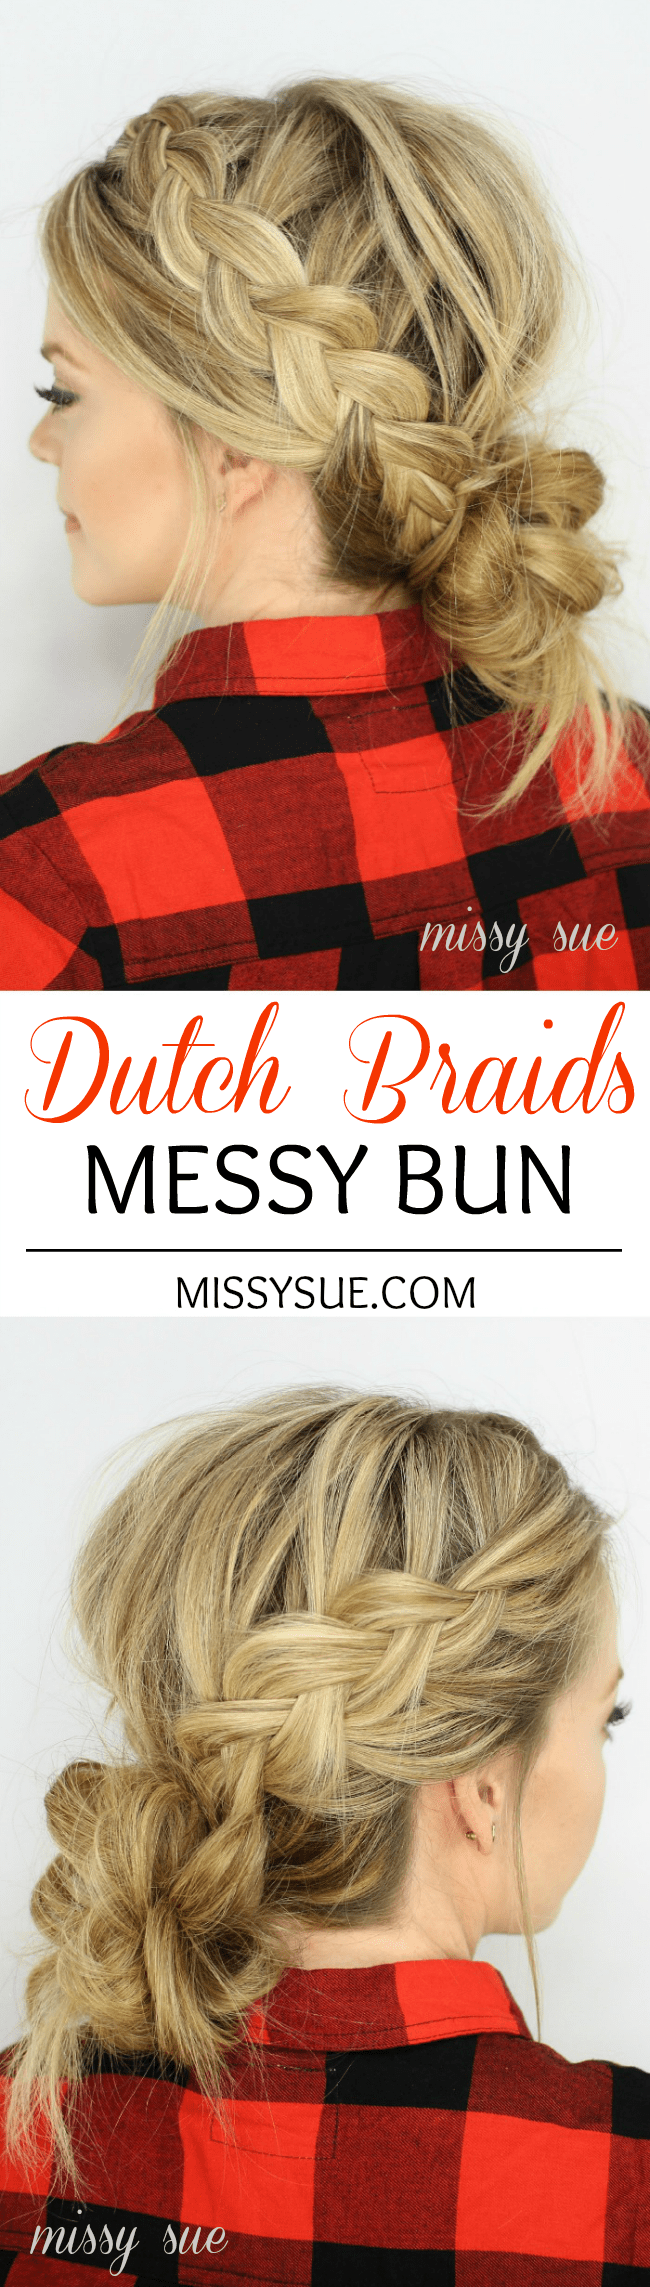 Dutch Braids and Low Messy Bun